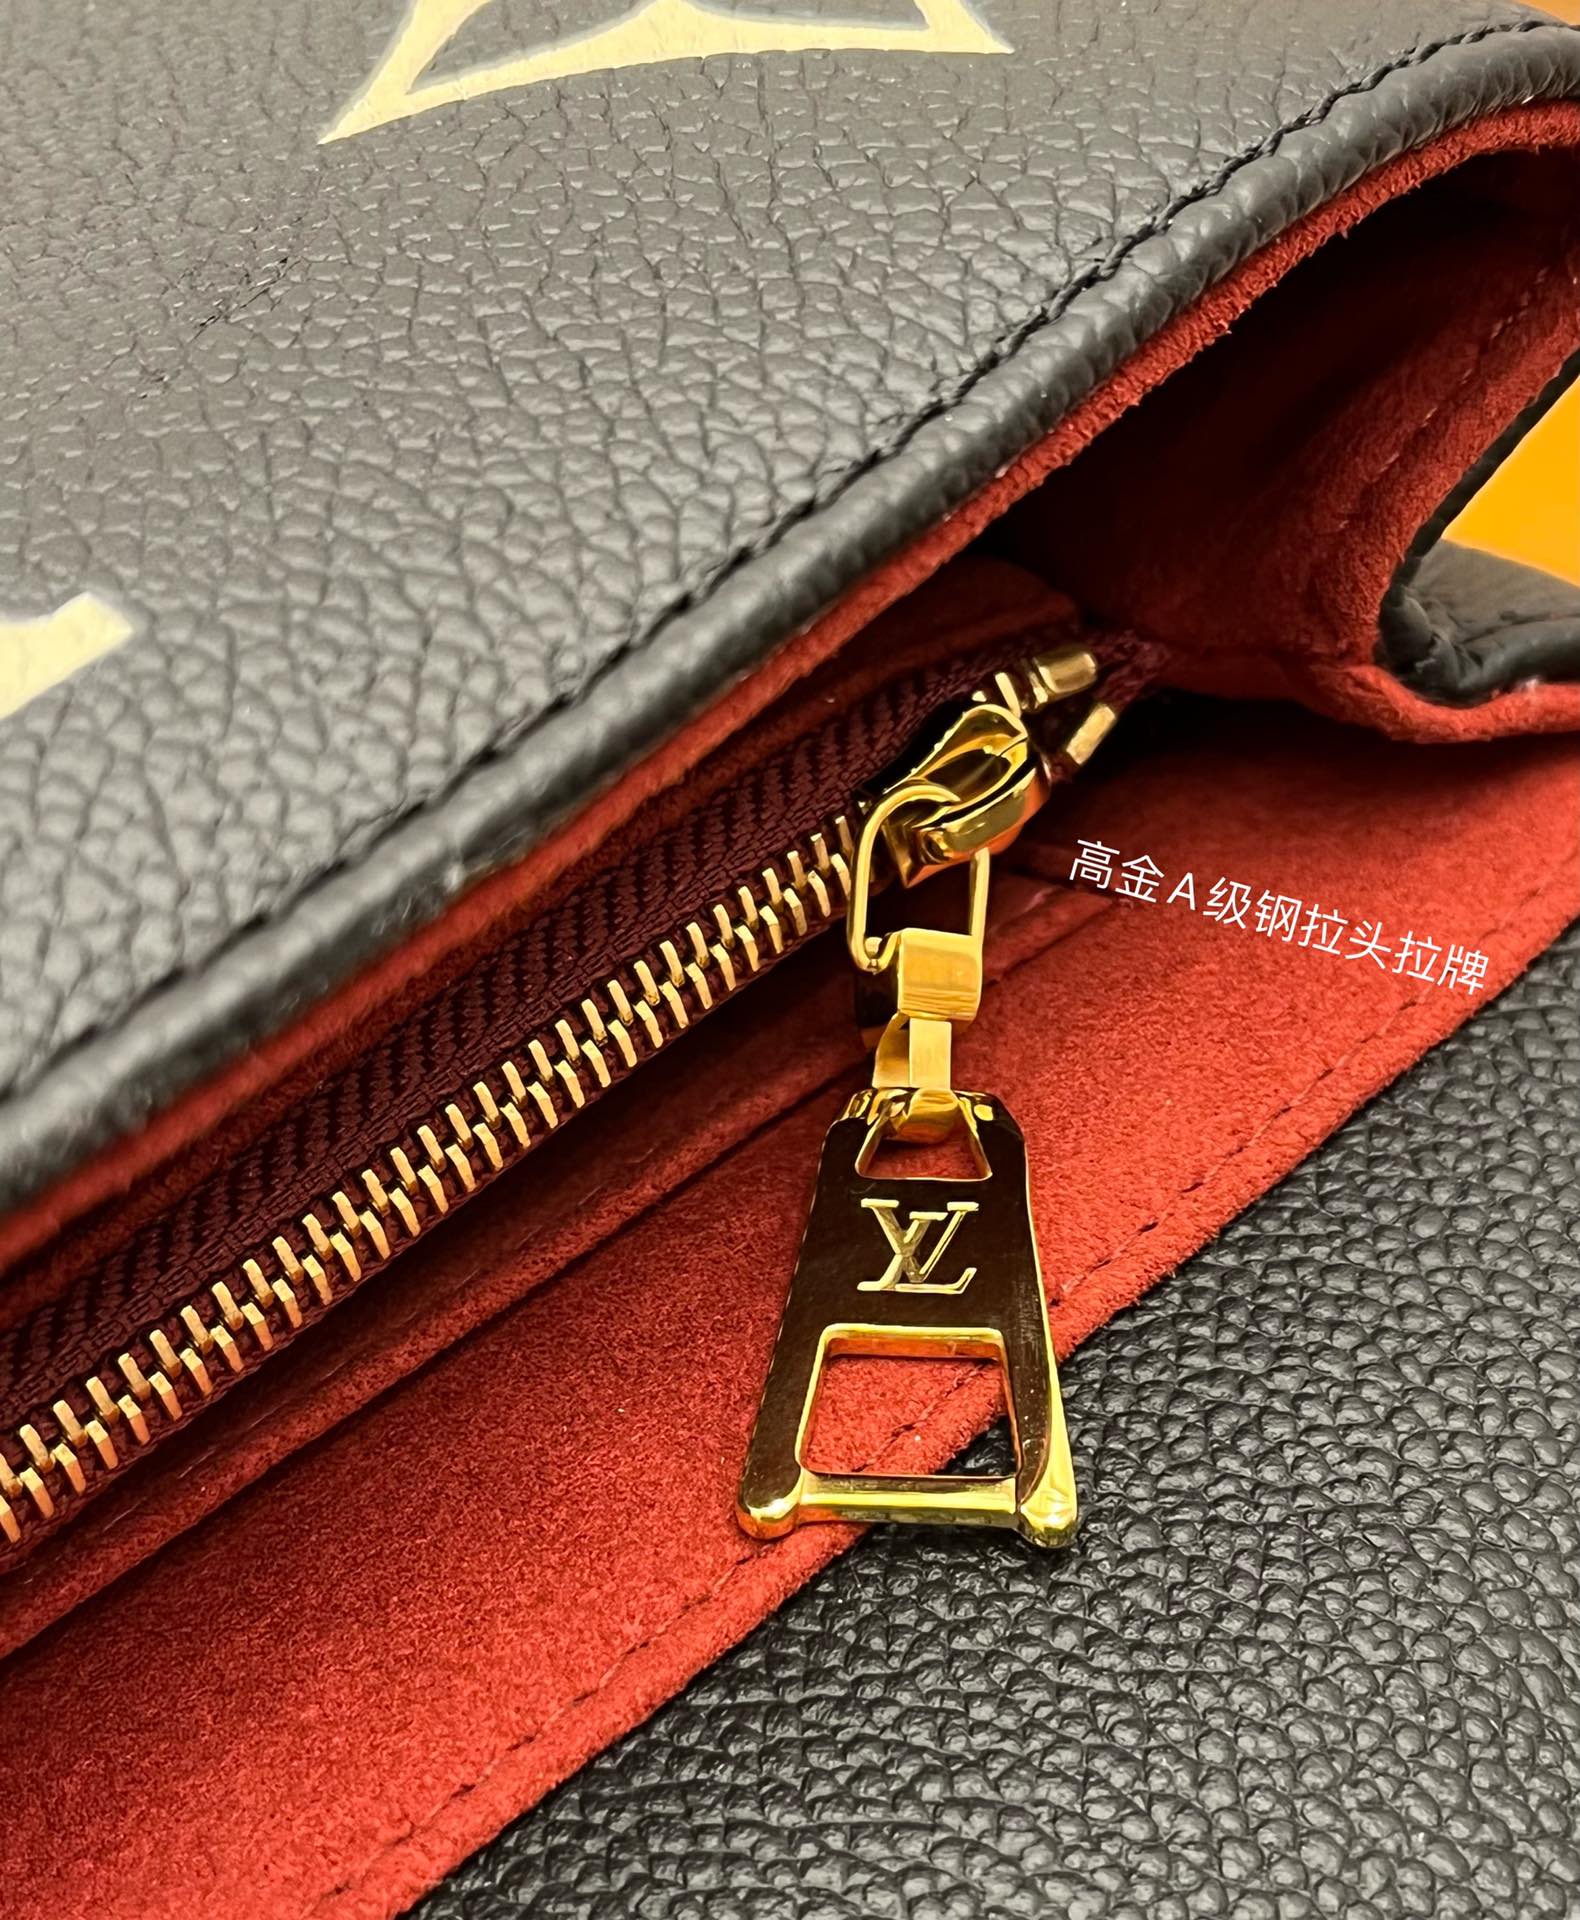 double size M45978 Louis vuitton Madeleine BB handbag with S-lock